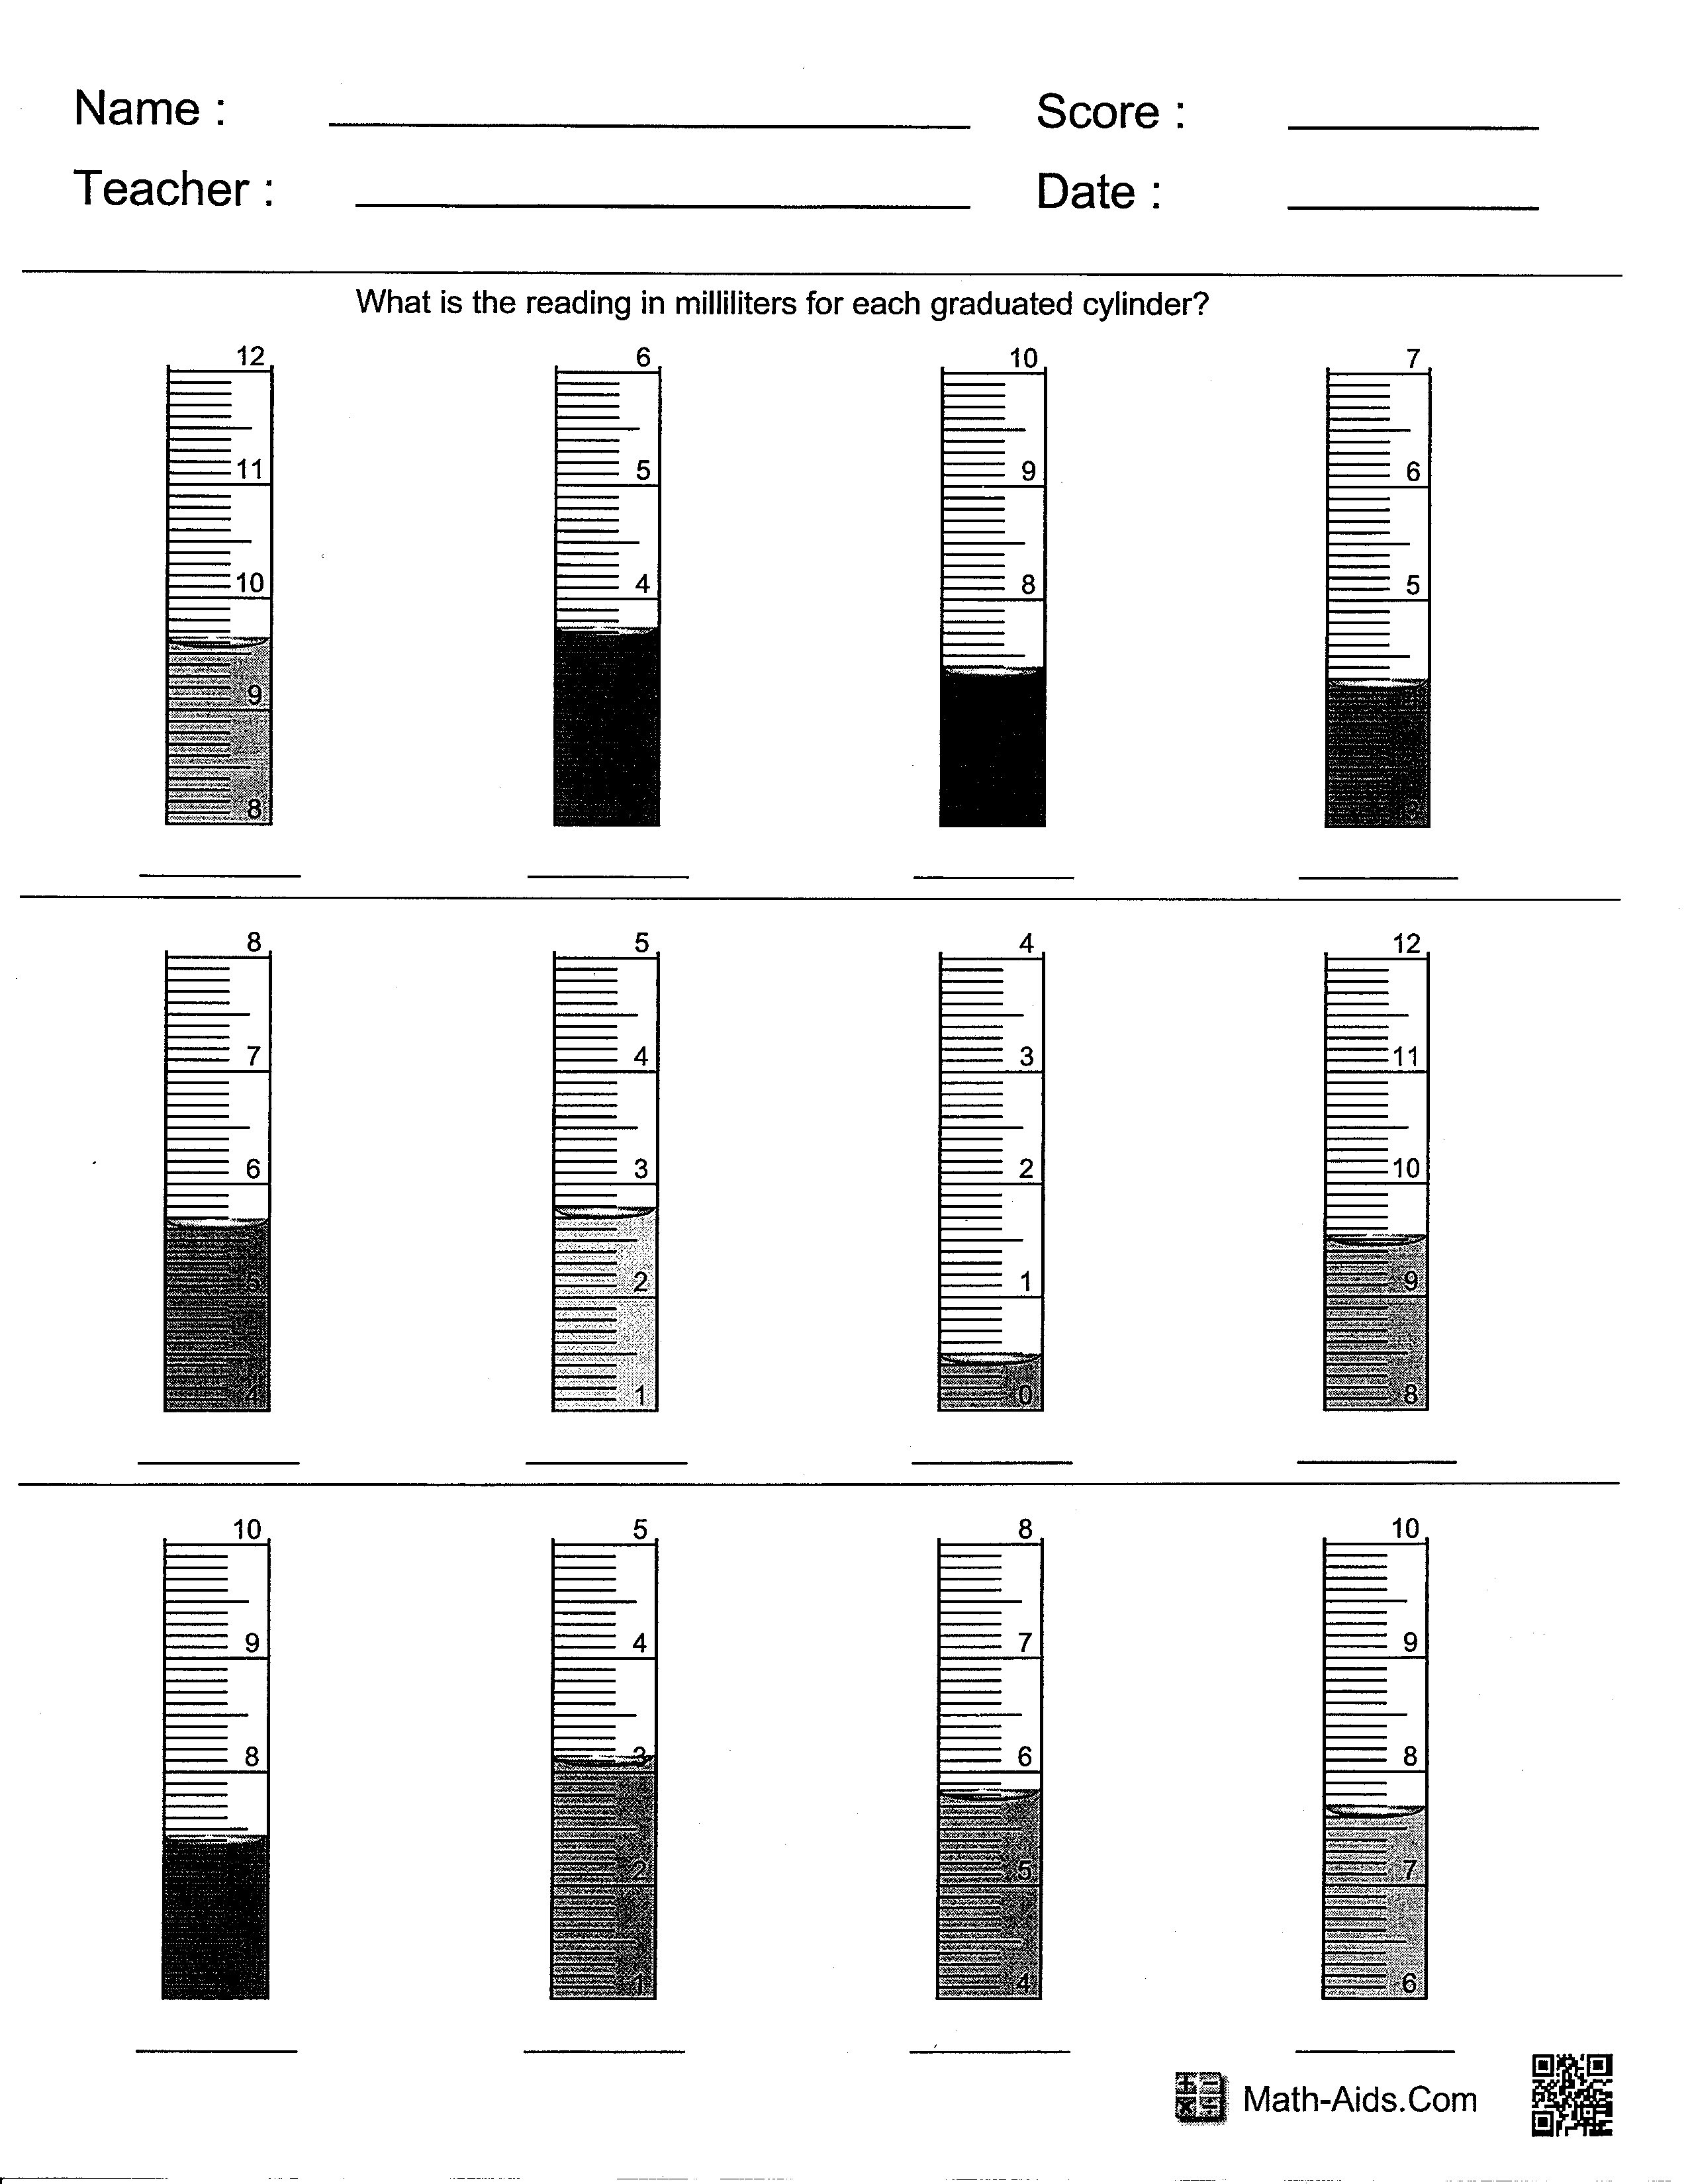 Graduated Cylinder Measuring Liquid Volume Worksheet - Nidecmege In Reading Graduated Cylinders Worksheet